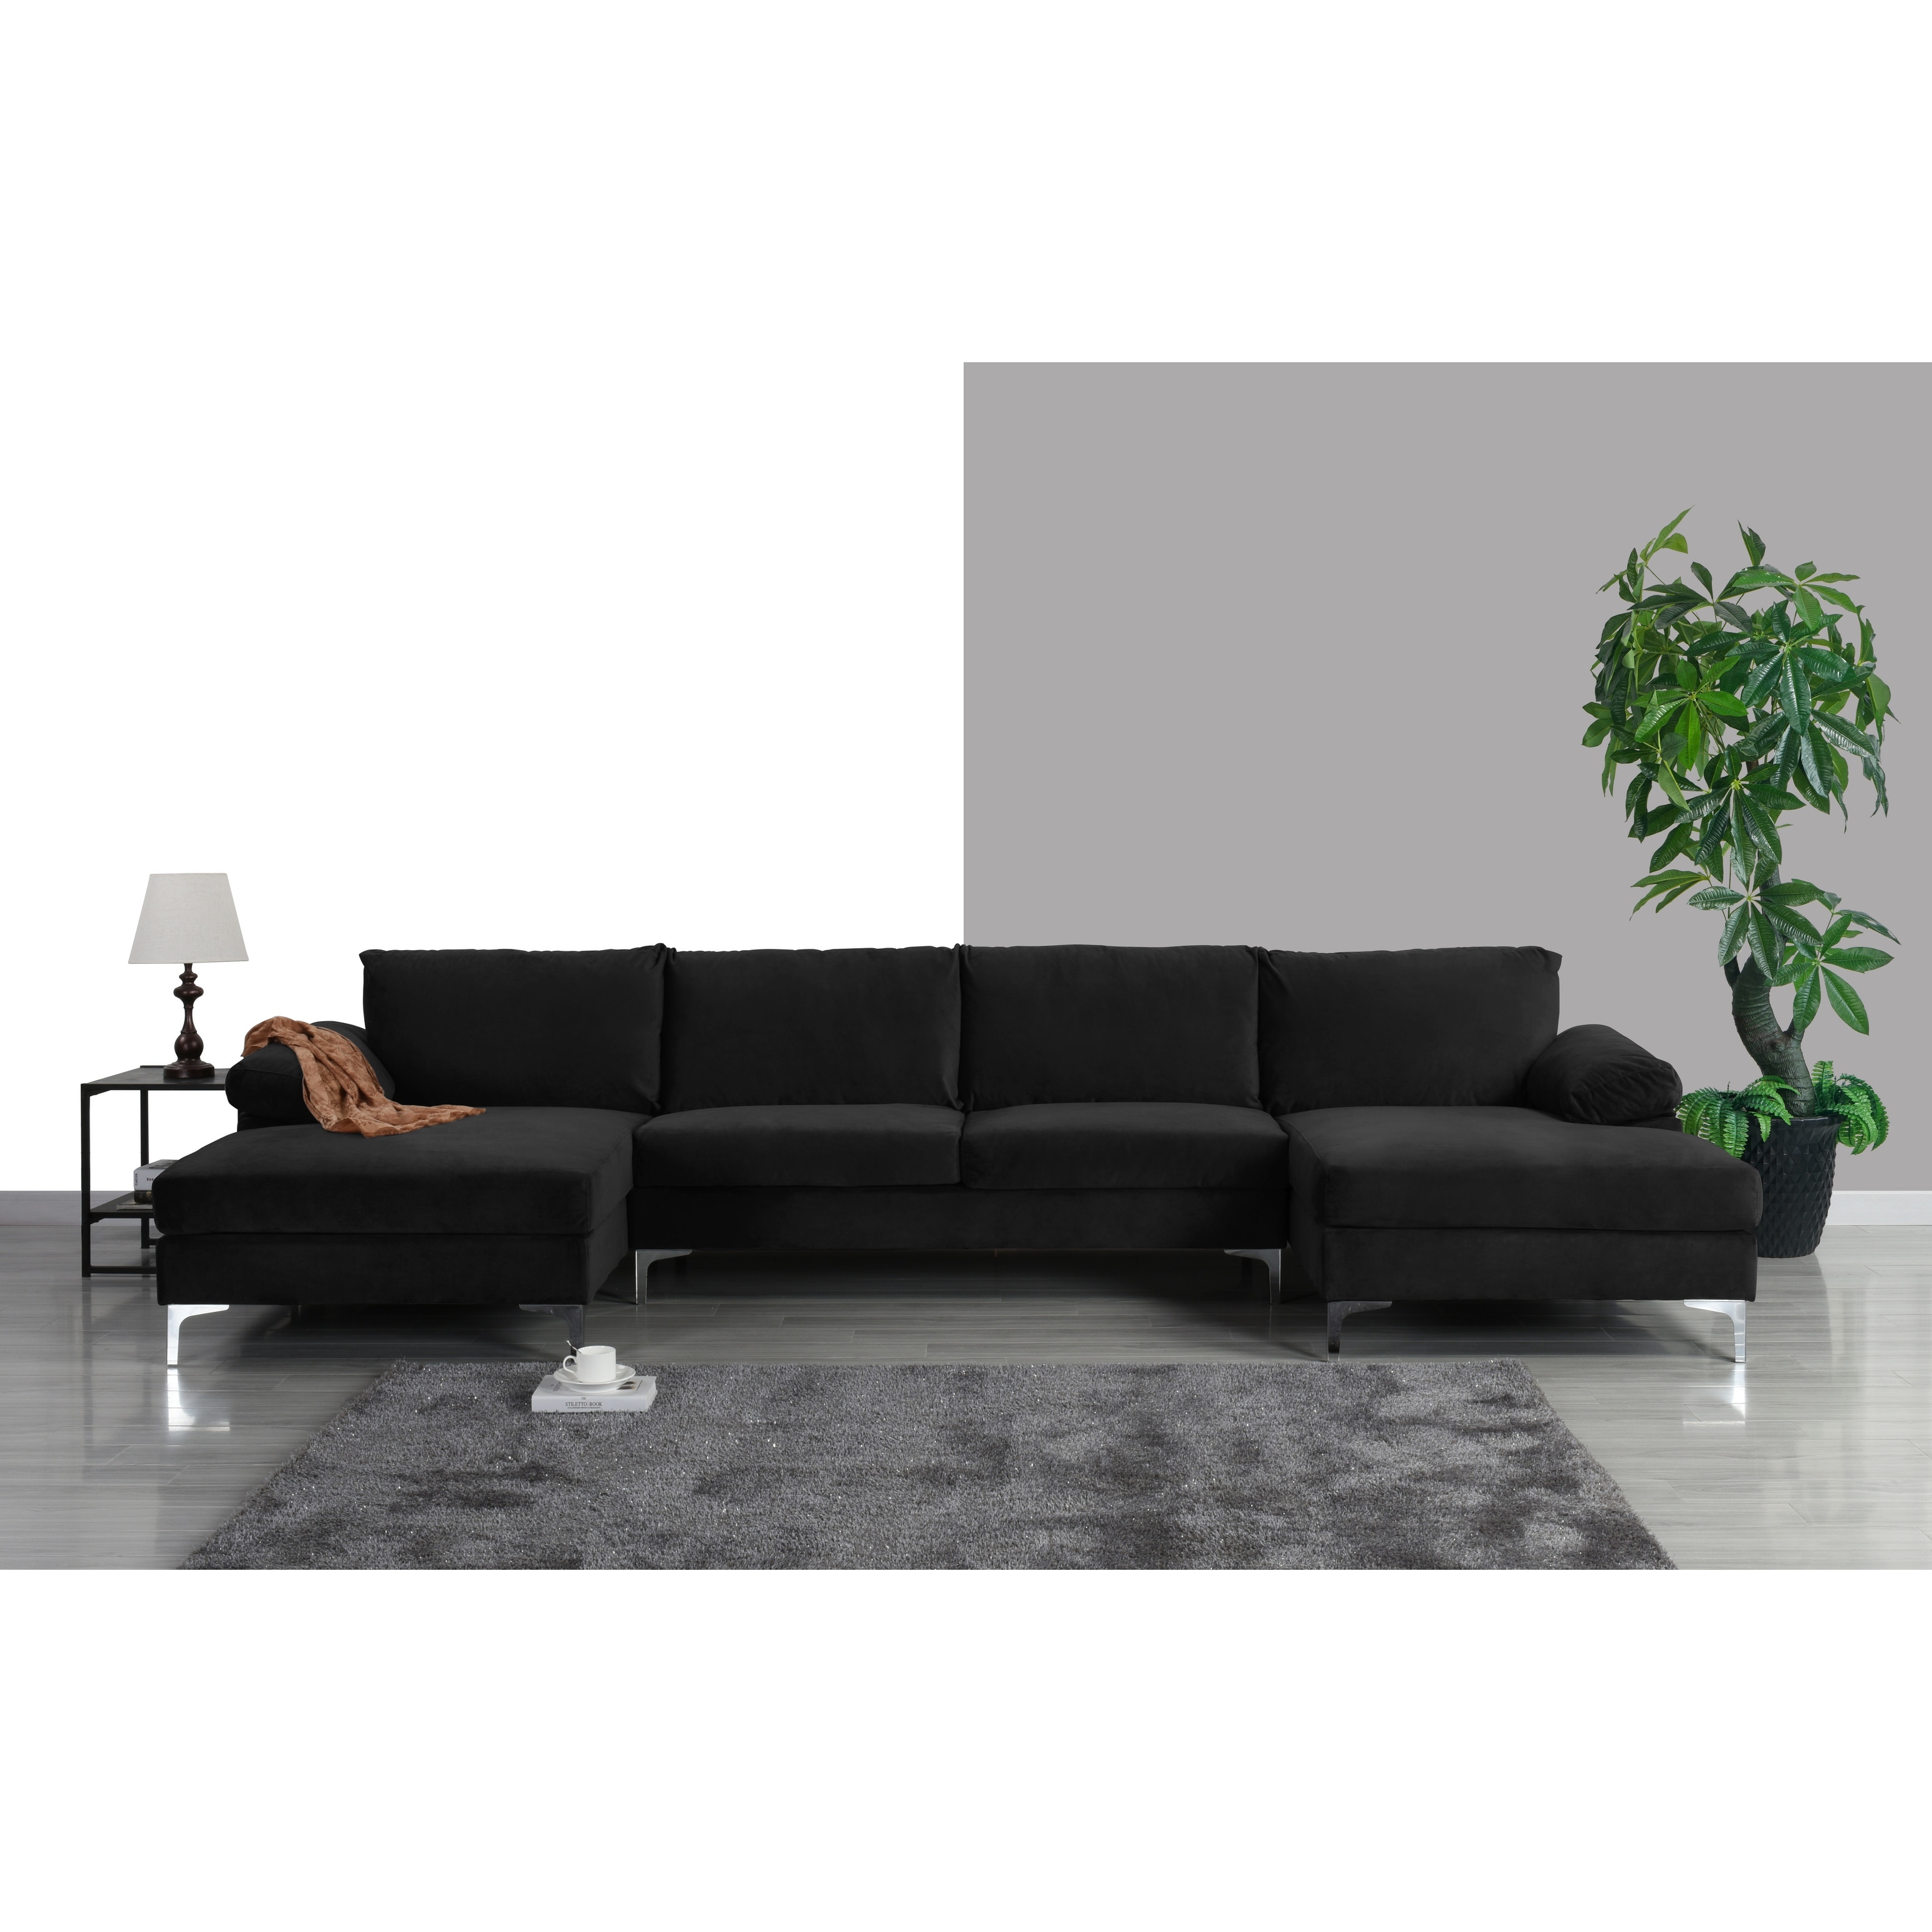 Zeeman kreupel Overwinnen Modern XL Velvet Upholstery U-shaped Sectional Sofa - Overstock - 28156967